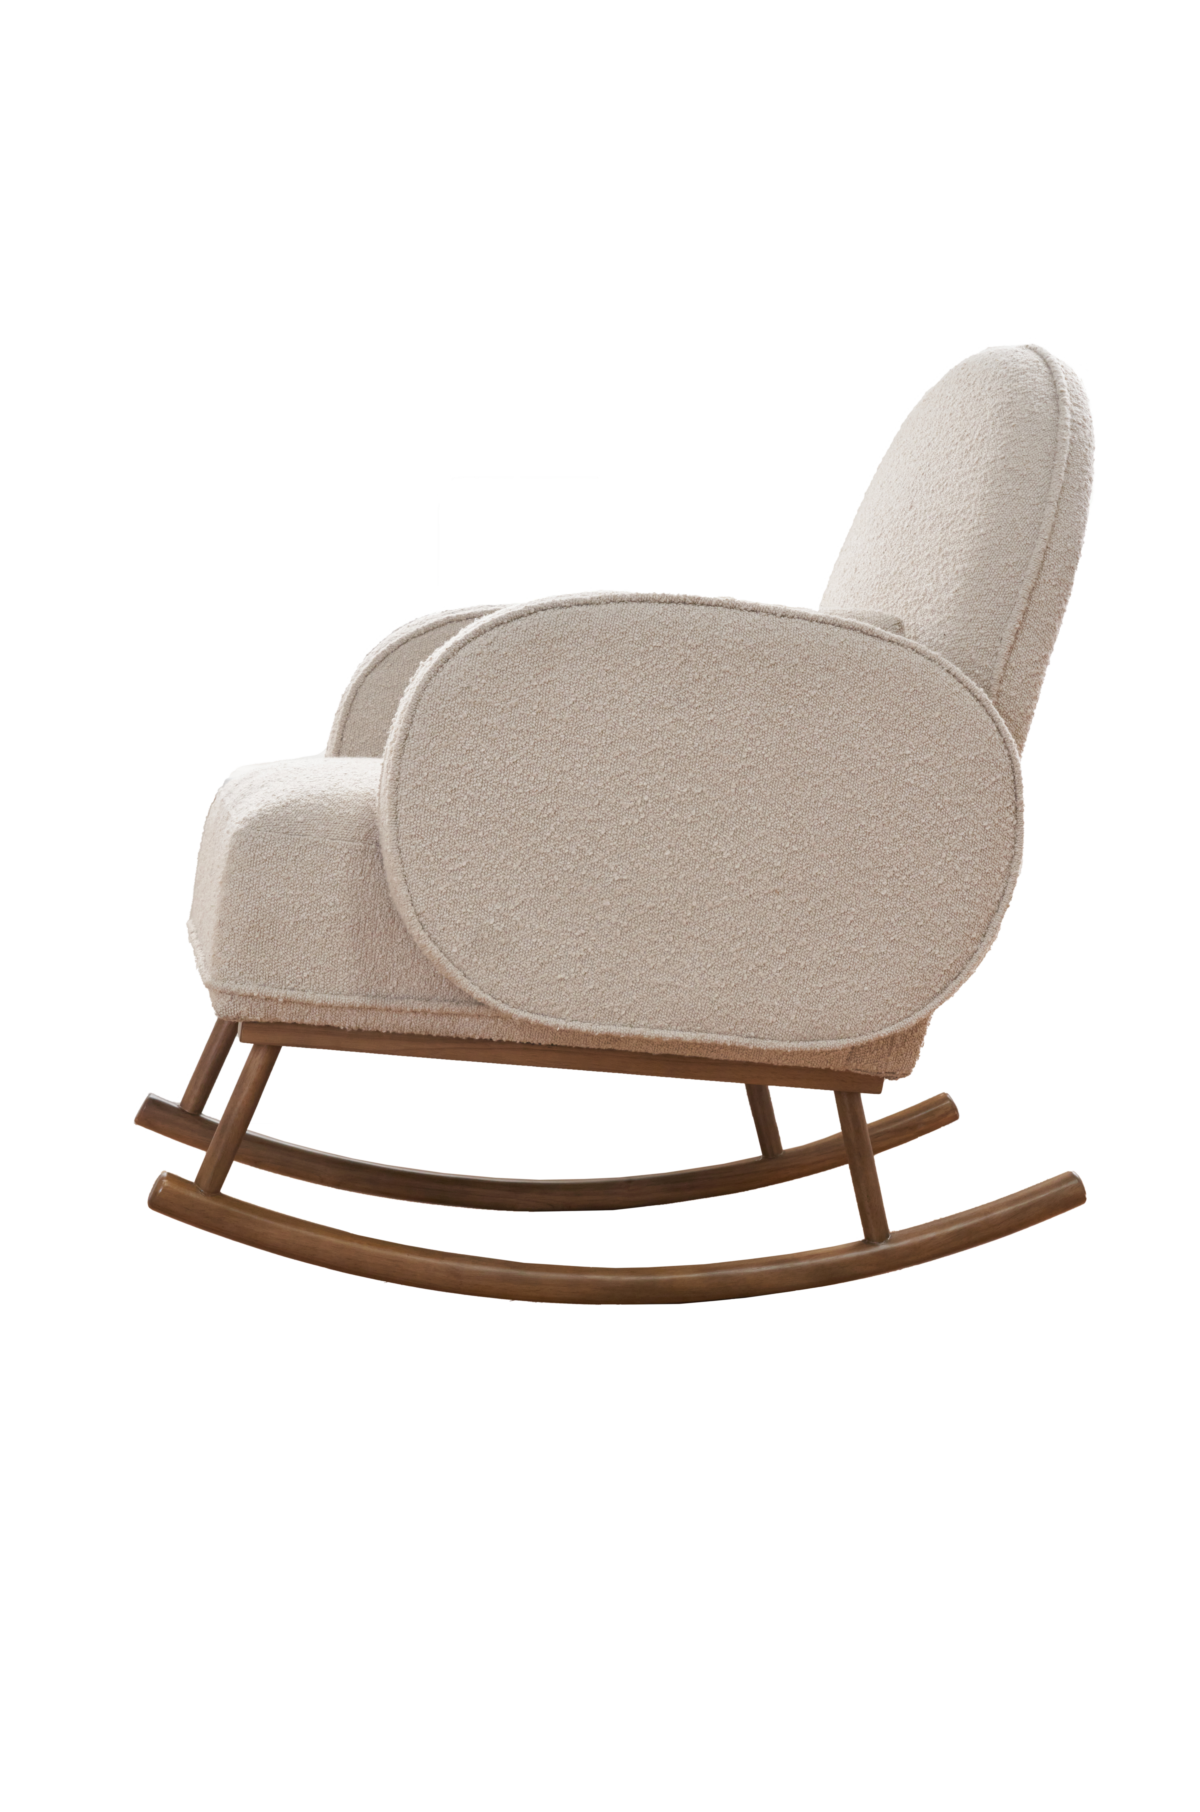 Jonah Rocking Chair & Foot Stool Set - Nursing Chairs - Tutti Bambini